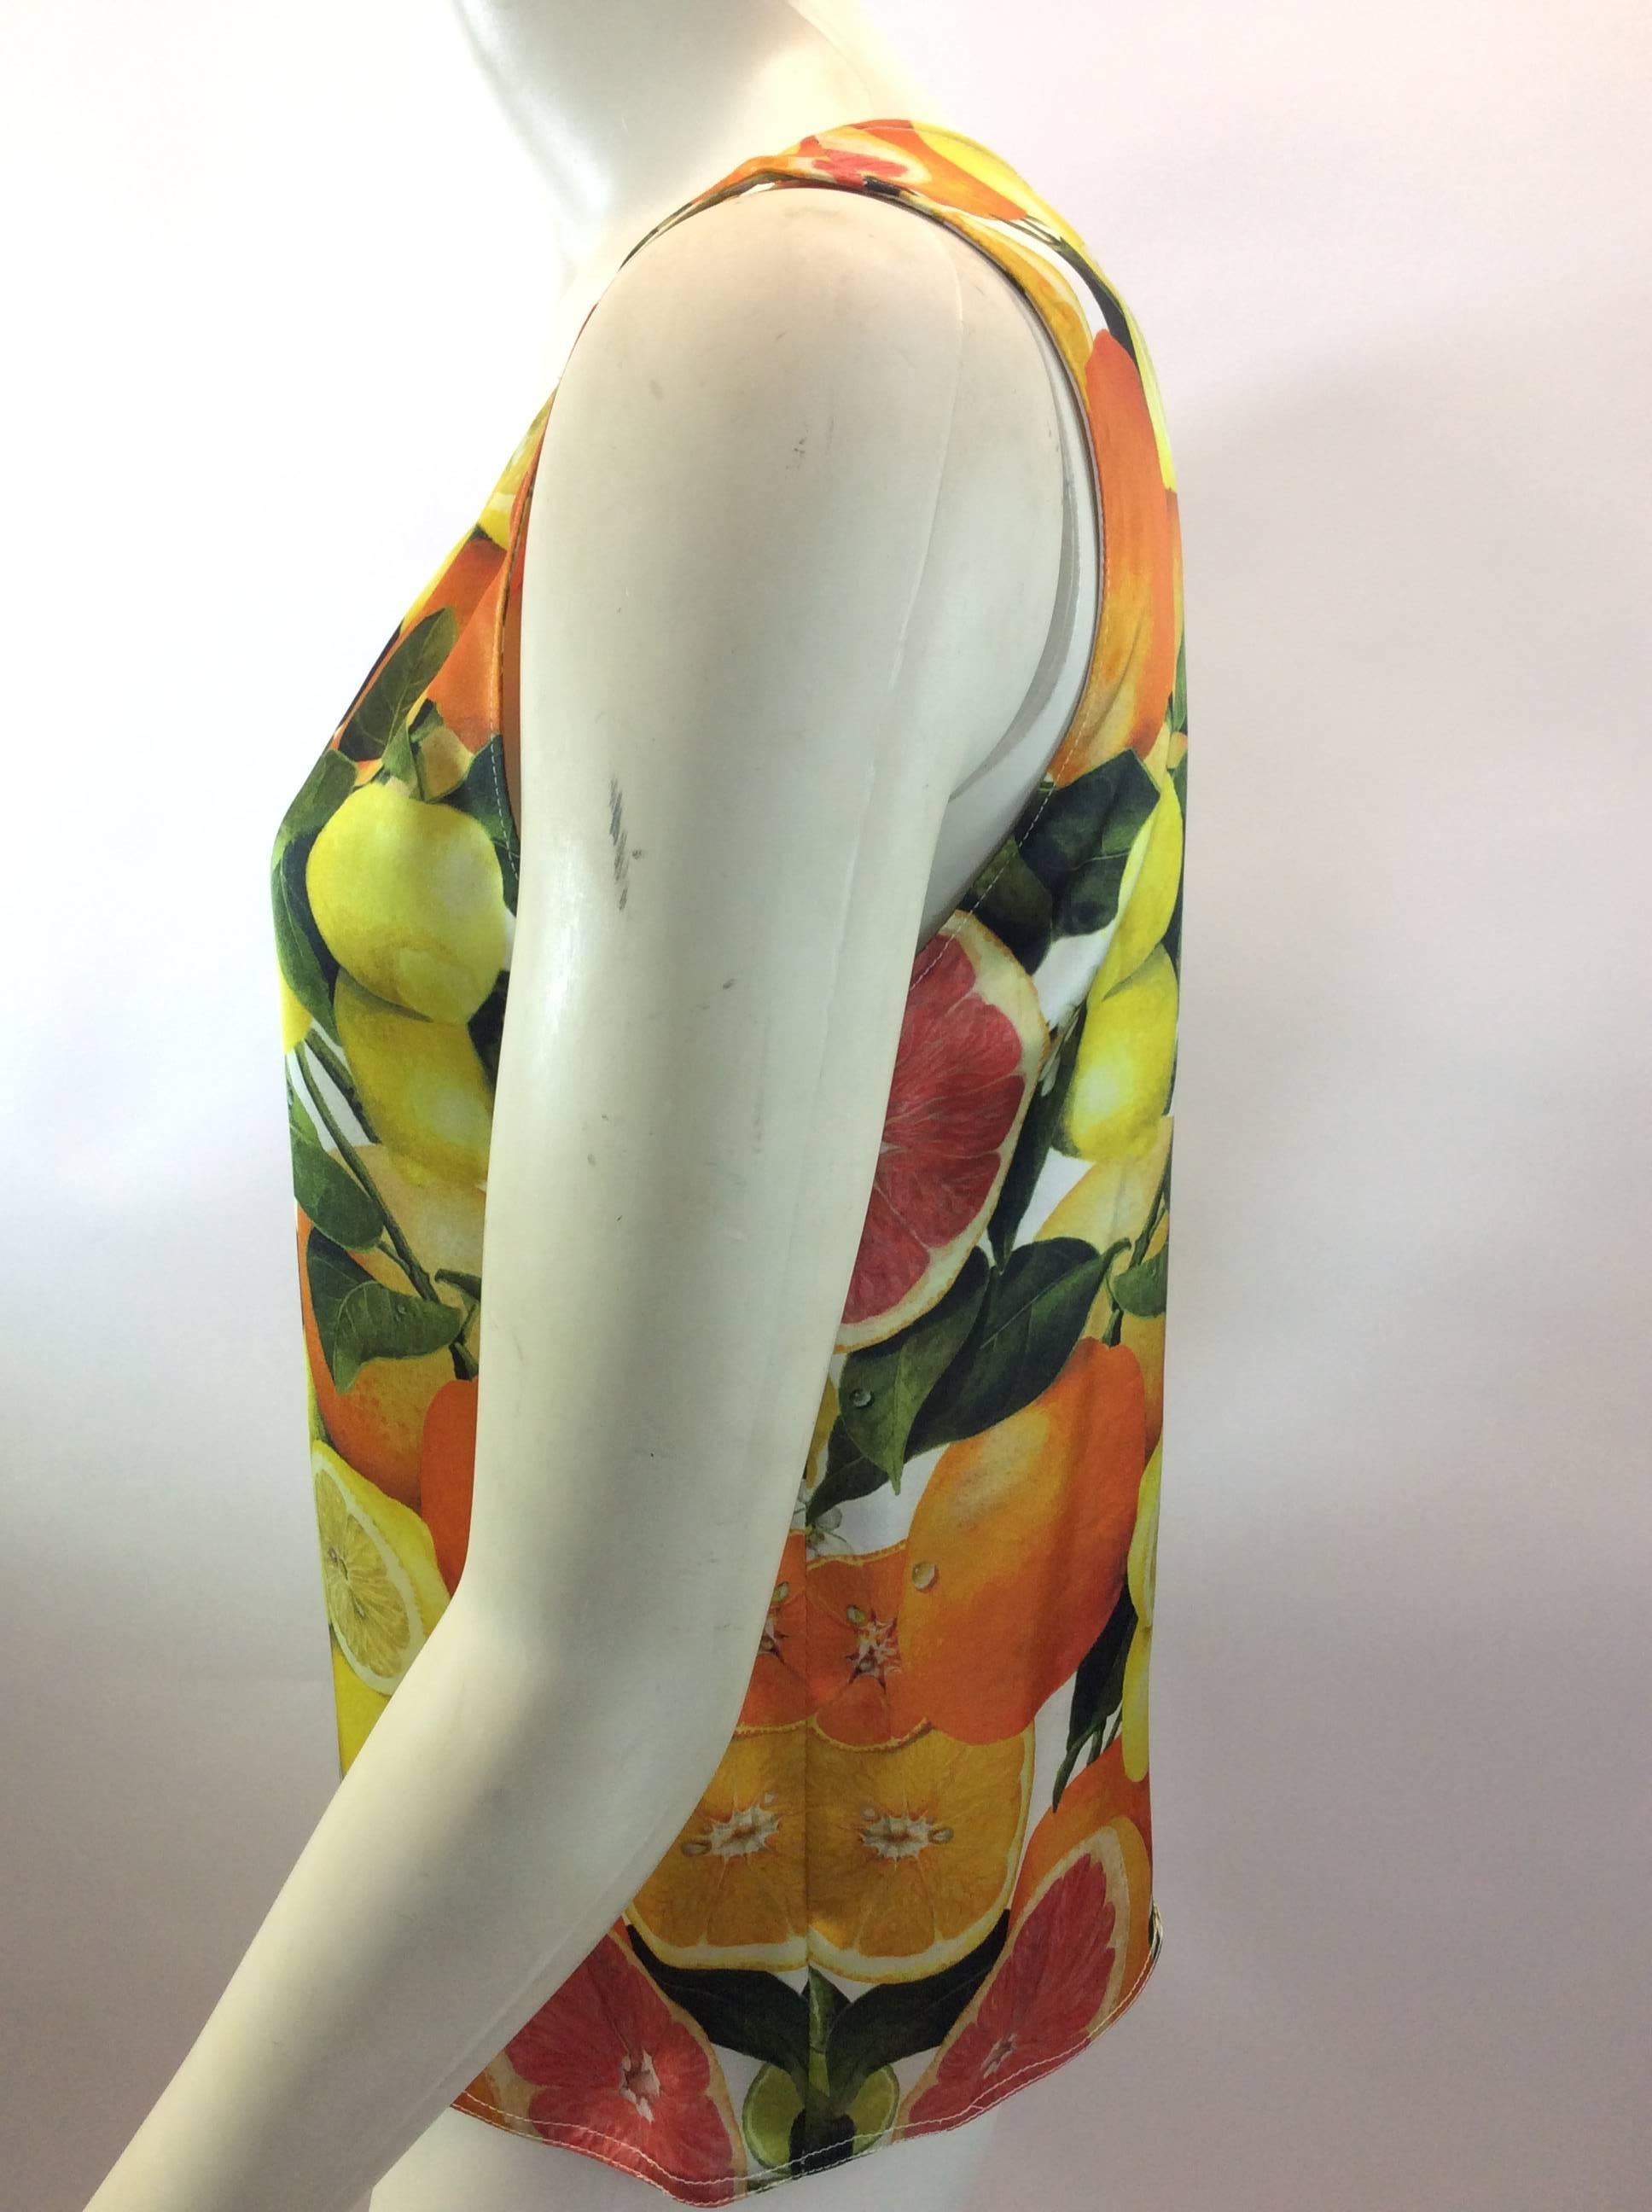 Stella McCartney Fruit Print Silk Blouse
100% Silk
Made in Italy
Length 20
Bust 34
Waist 34
$165